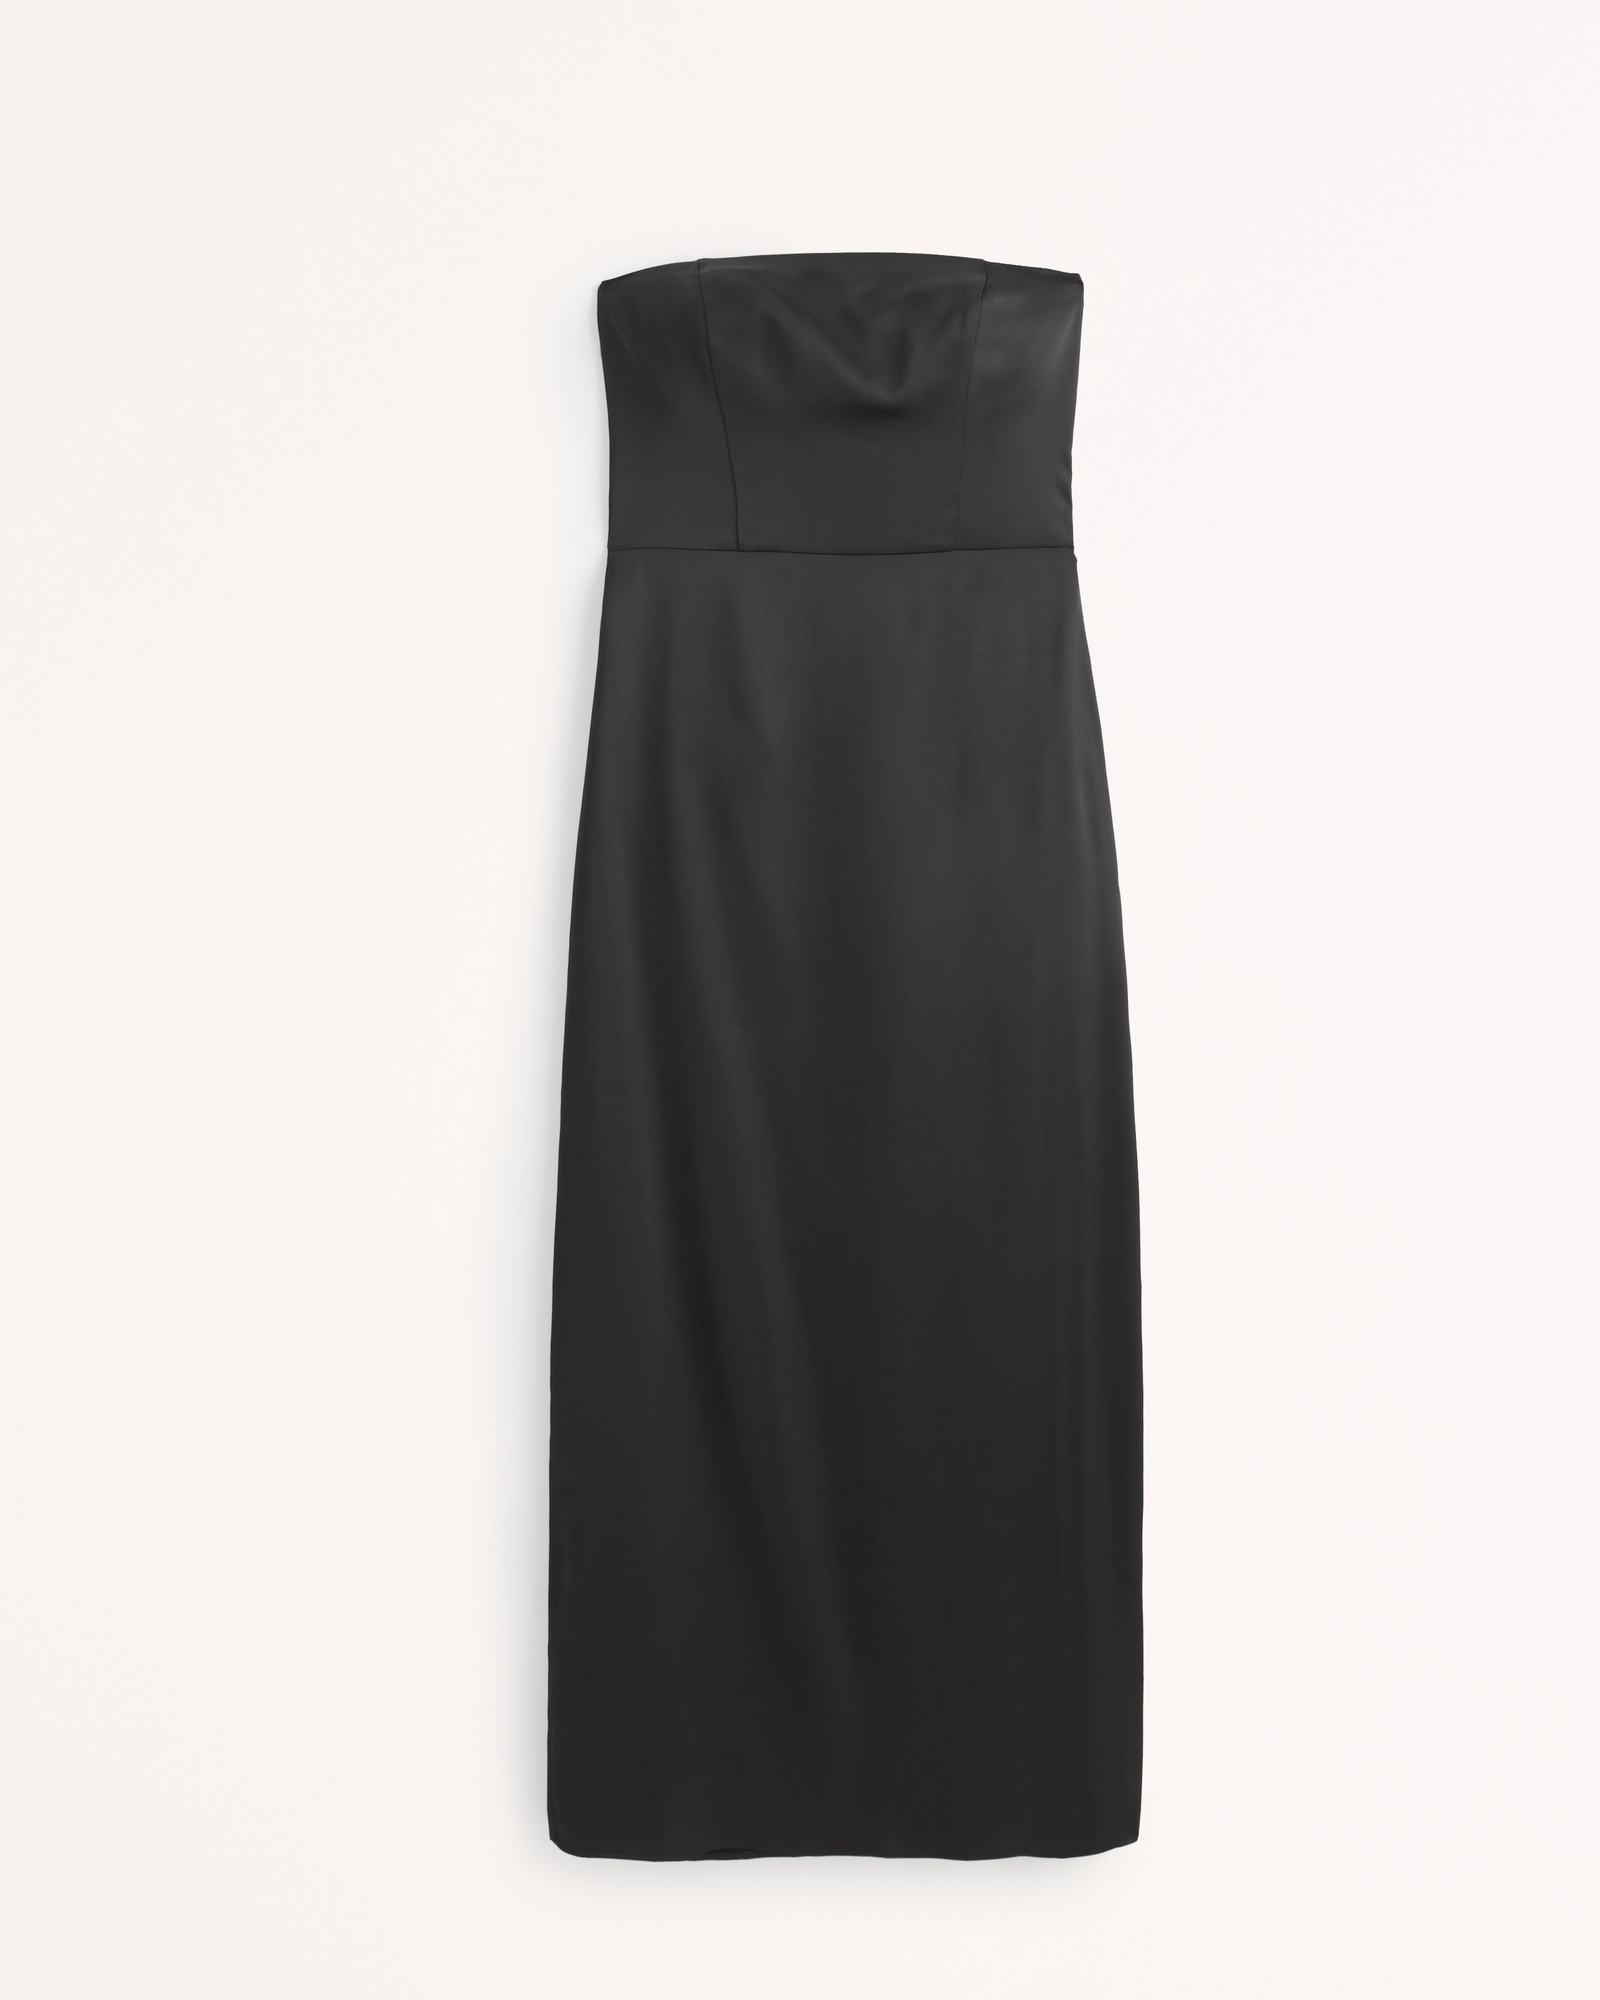 Co Black Smooth Faille Strapless Maxi Dress (Dresses,Maxi